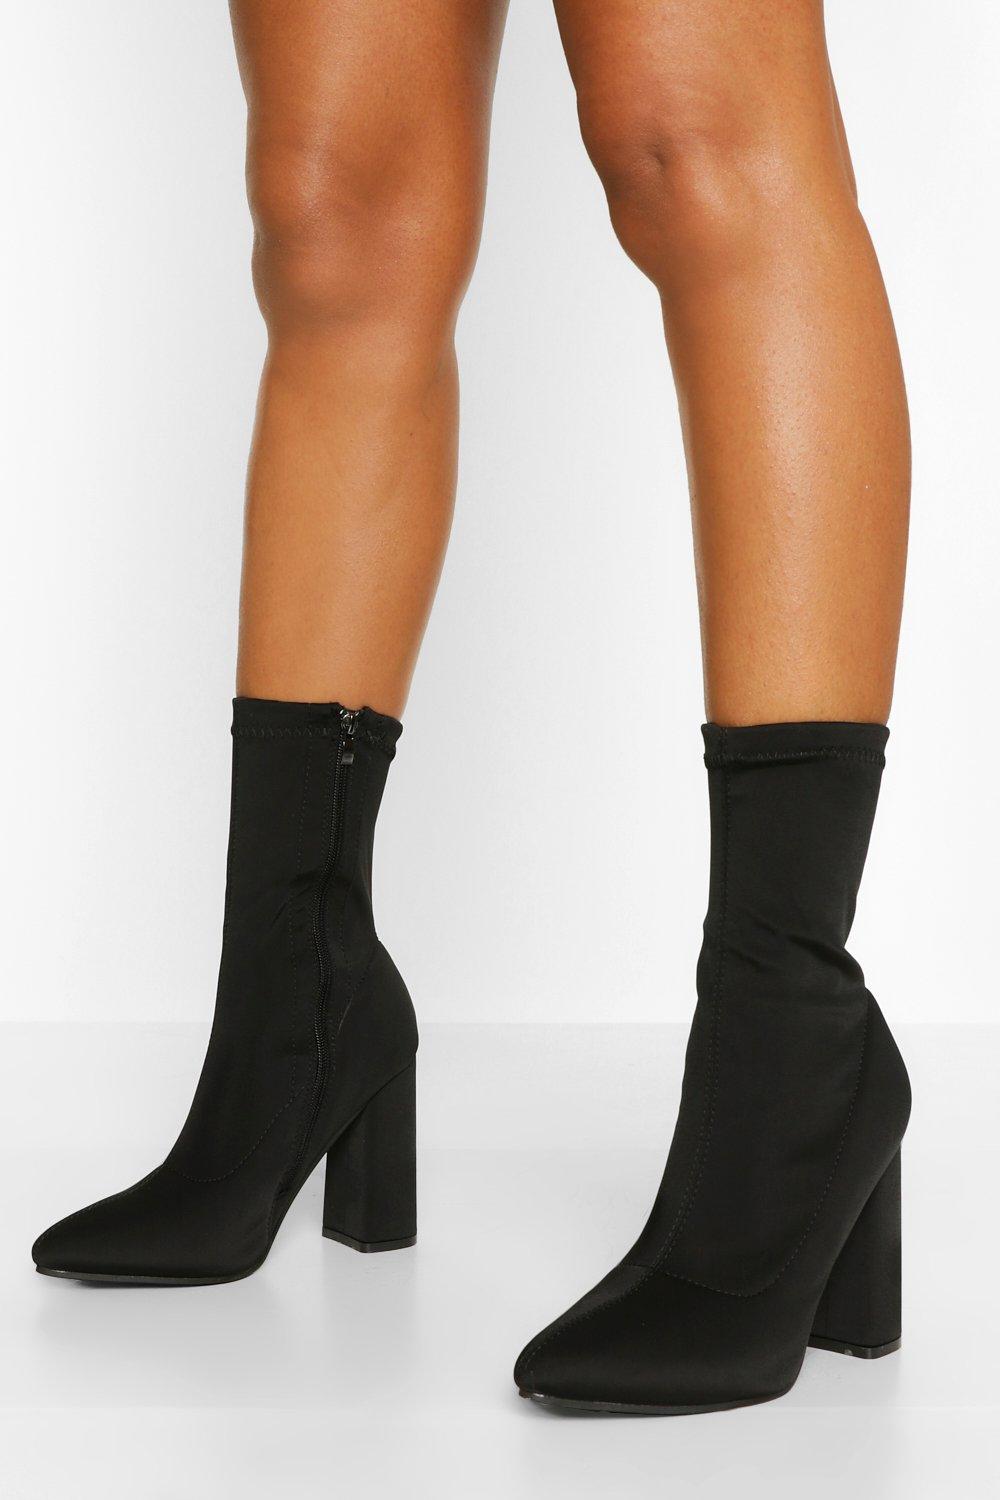 Womens Wide Fit Block Heel Pointed Toe Sock Boots - Black - 3, Black